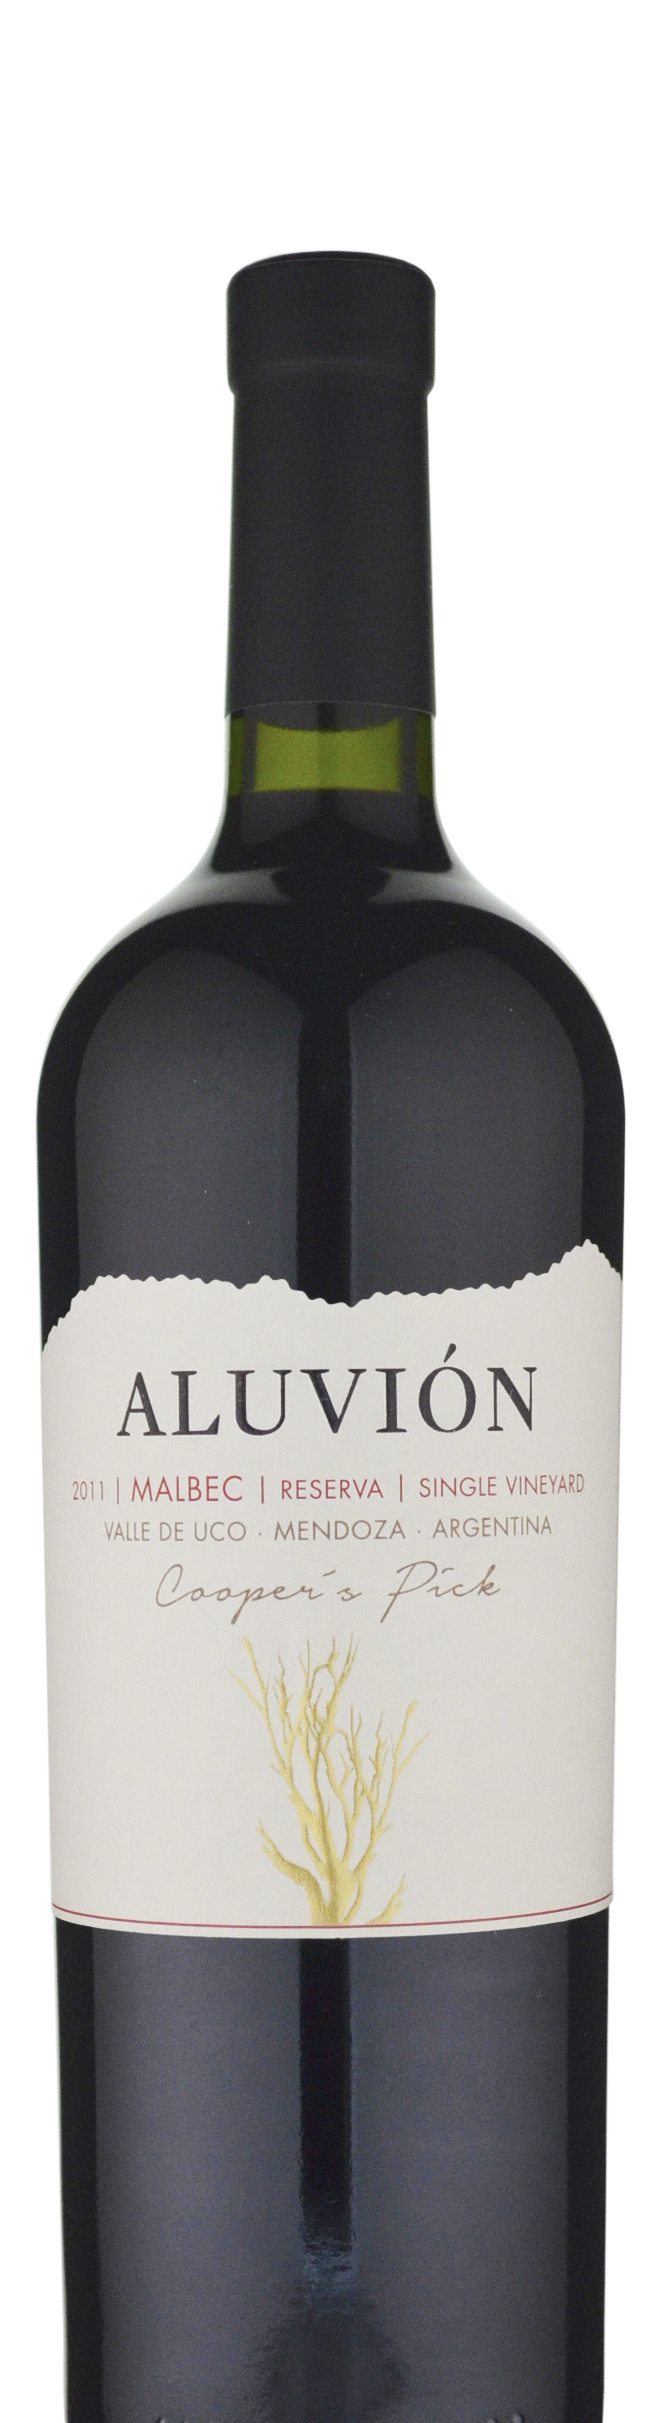 Aluvion Vineyards Cooper's Pick Reserve Malbec 2011